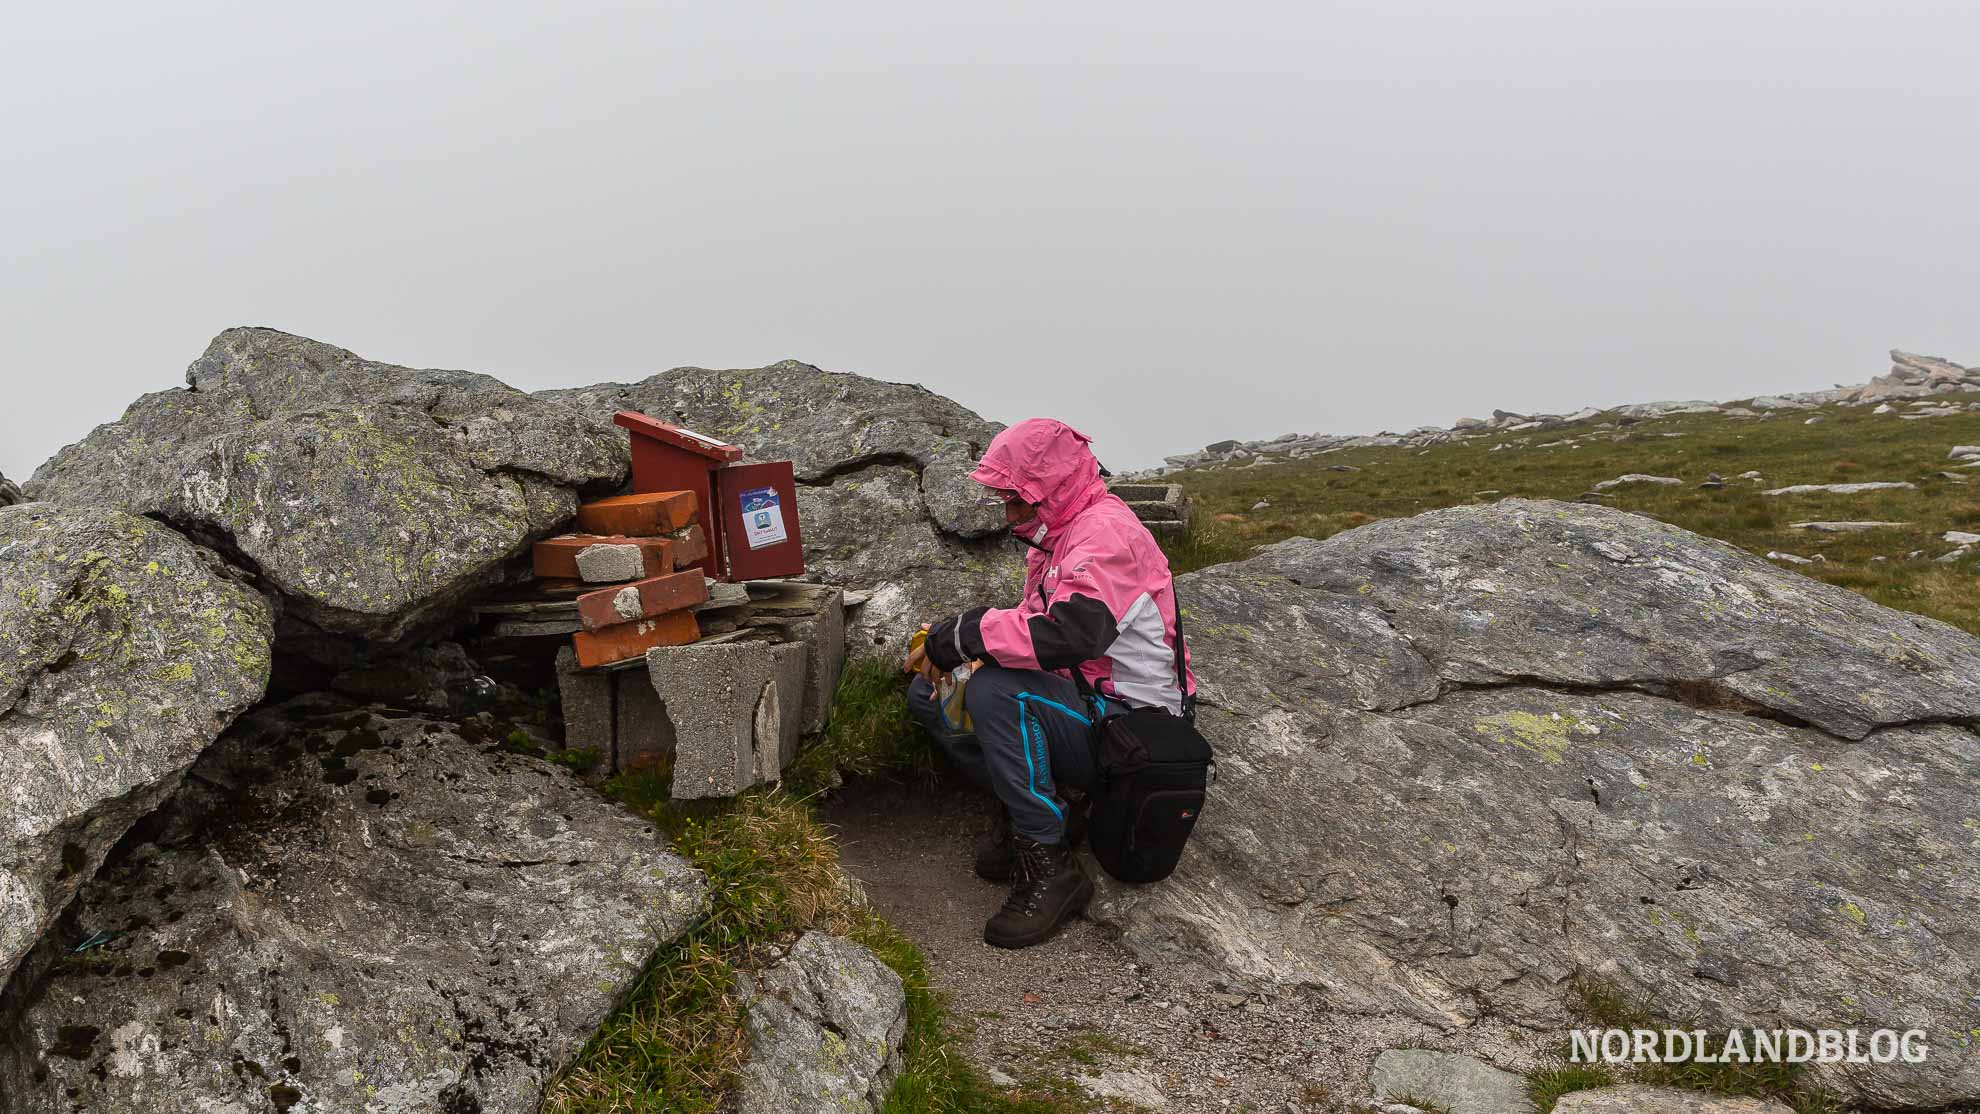 Gipfel der Wanderung in Bremanger zum Veten Norwegen (Nordlandblog)